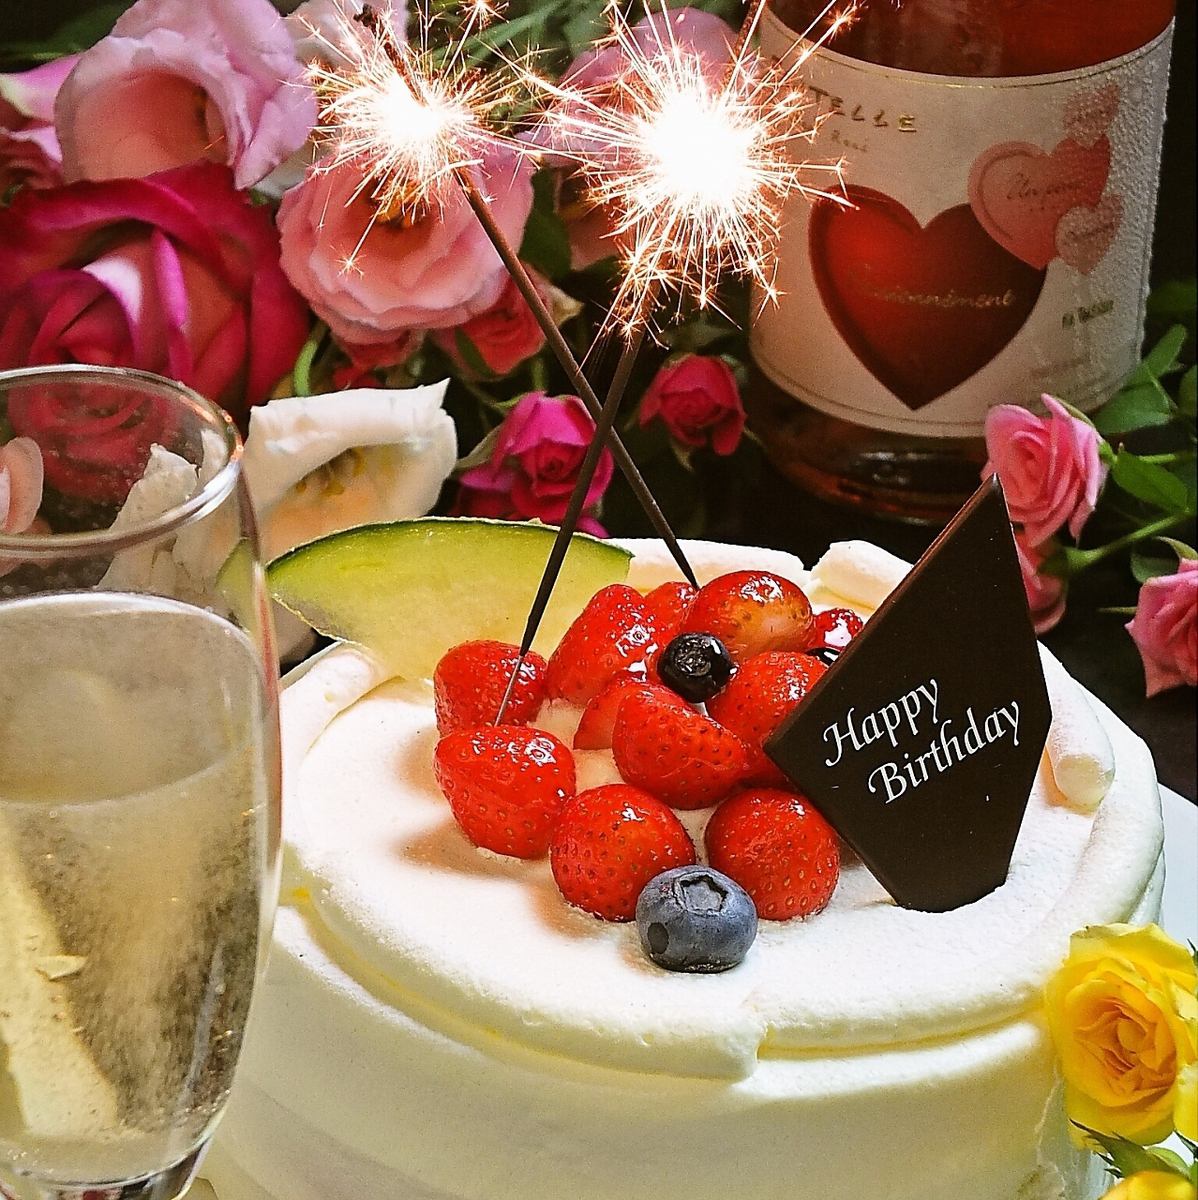 [Free bonus] Birthday anniversary dessert plate presented ♪ For various celebrations ♪